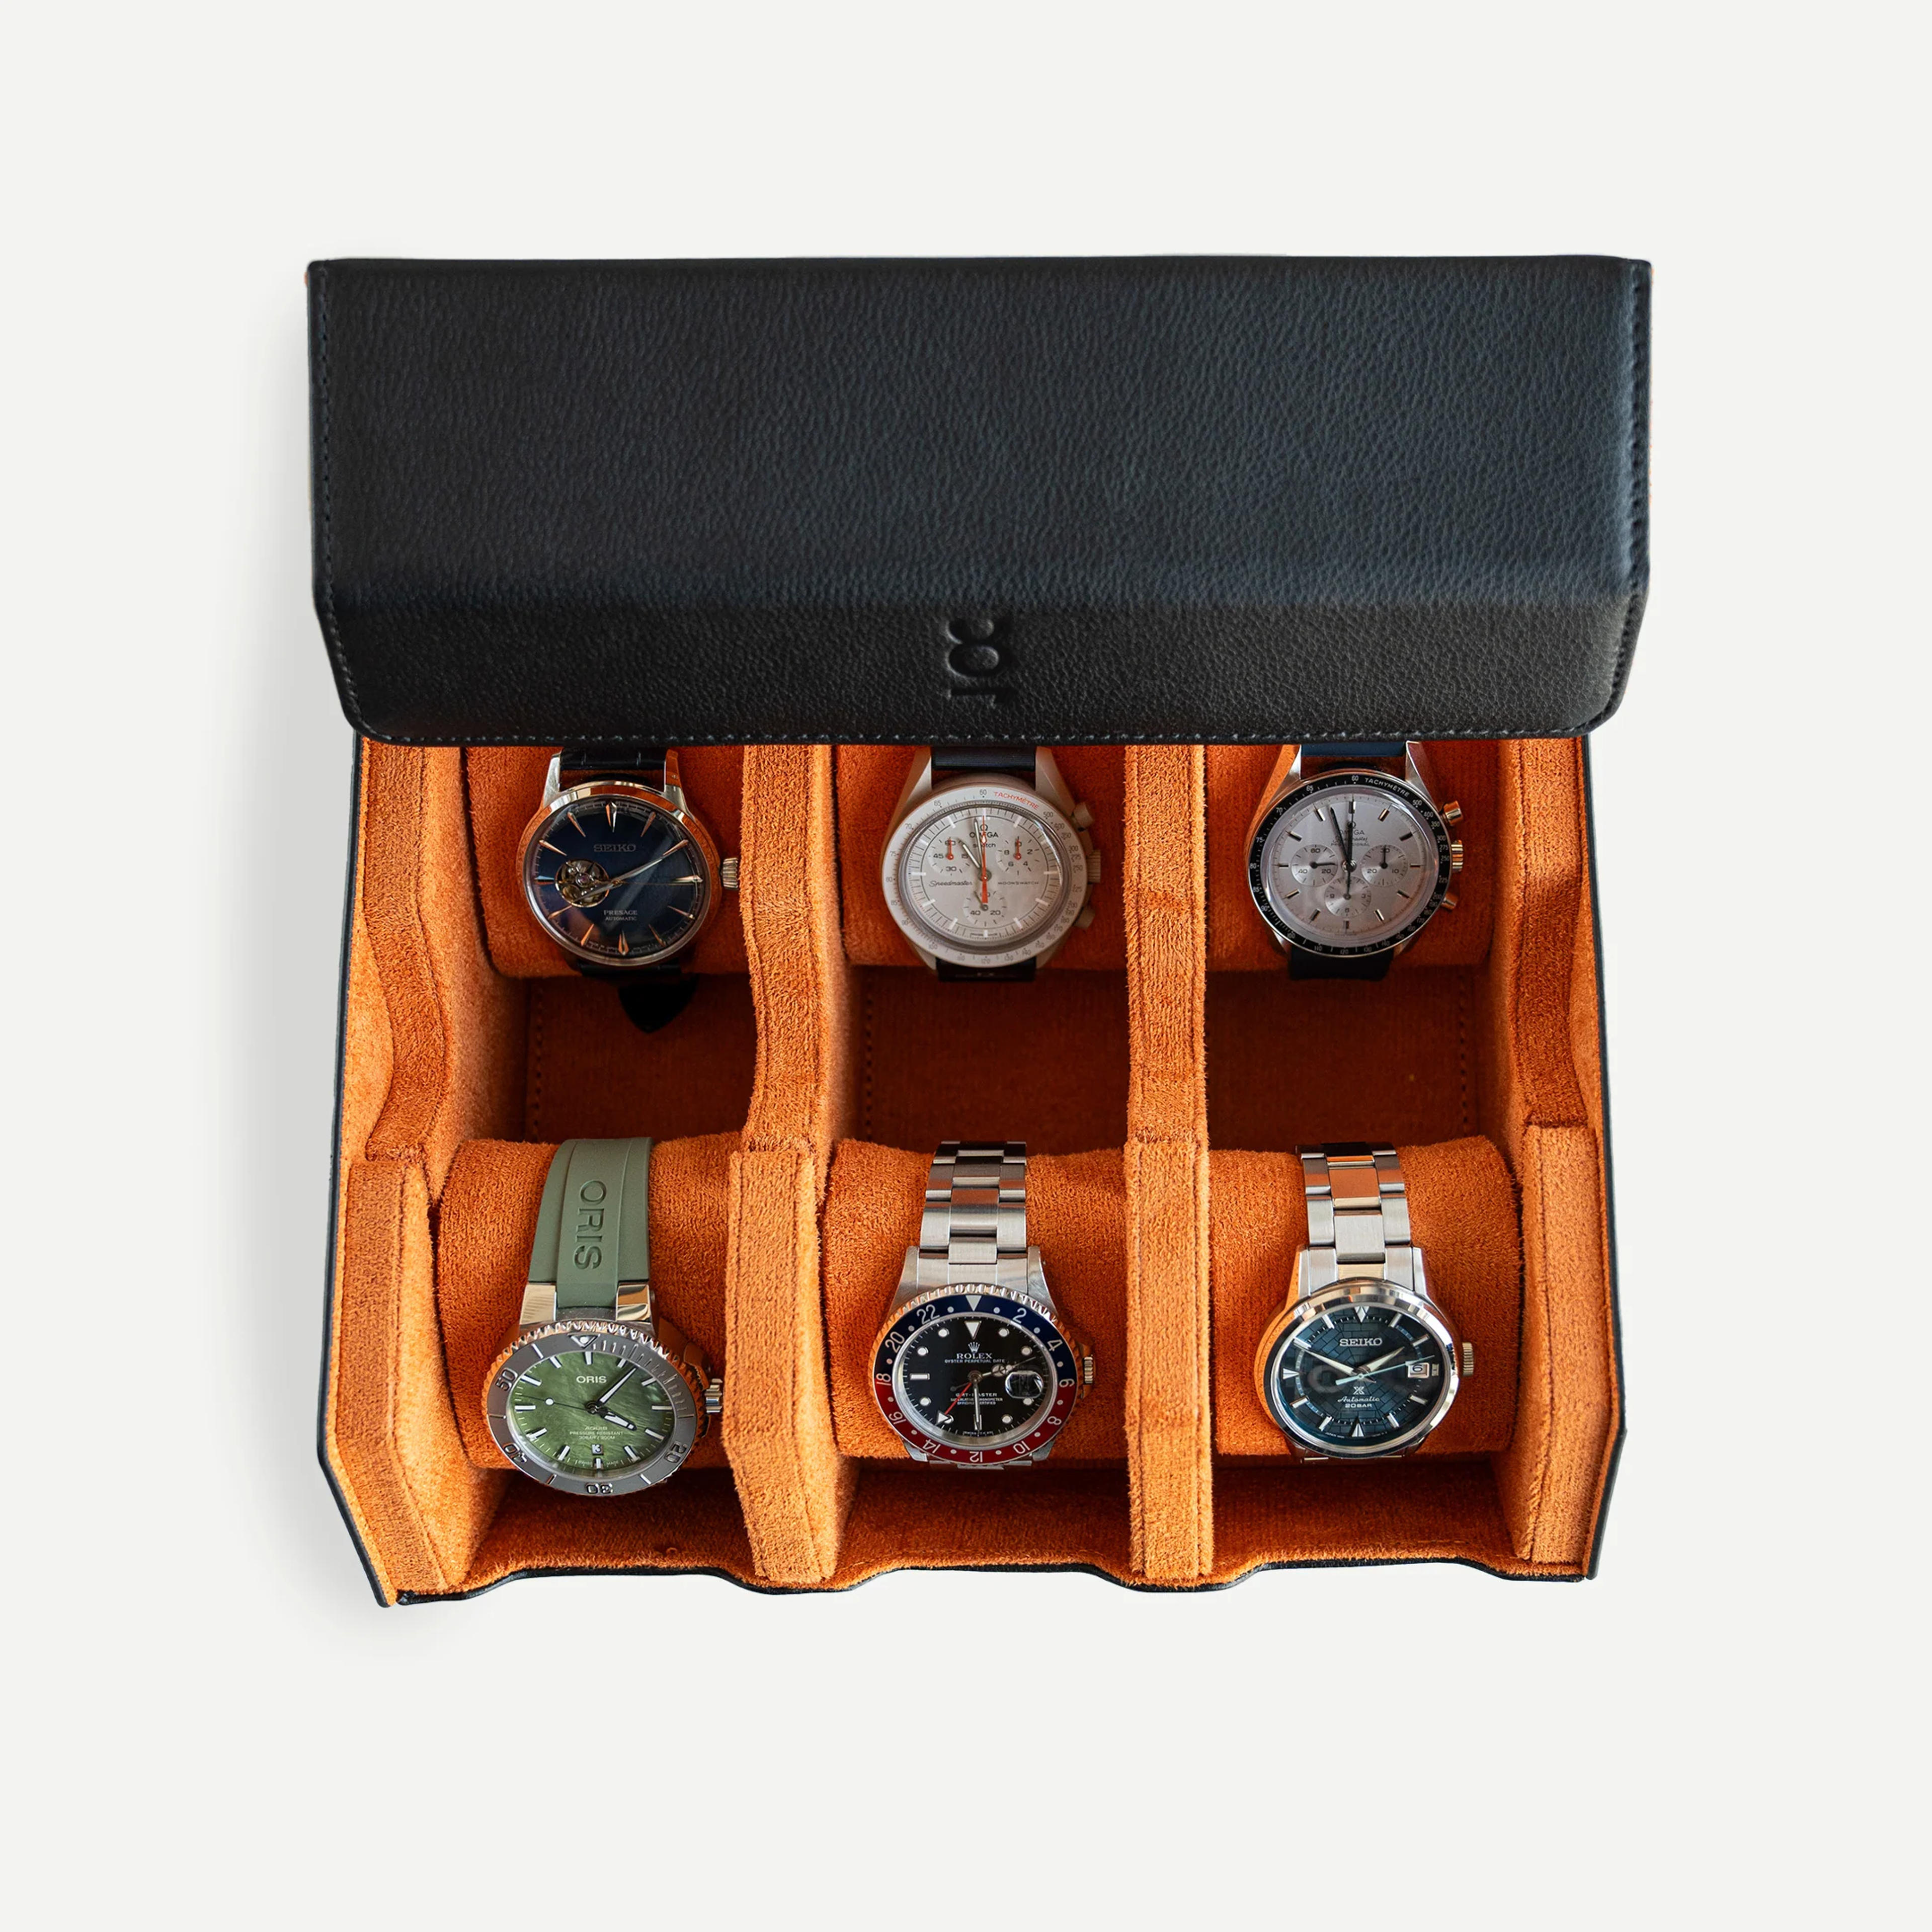 Hexagon Watch Box - Black Orange - $199 - Free shipping